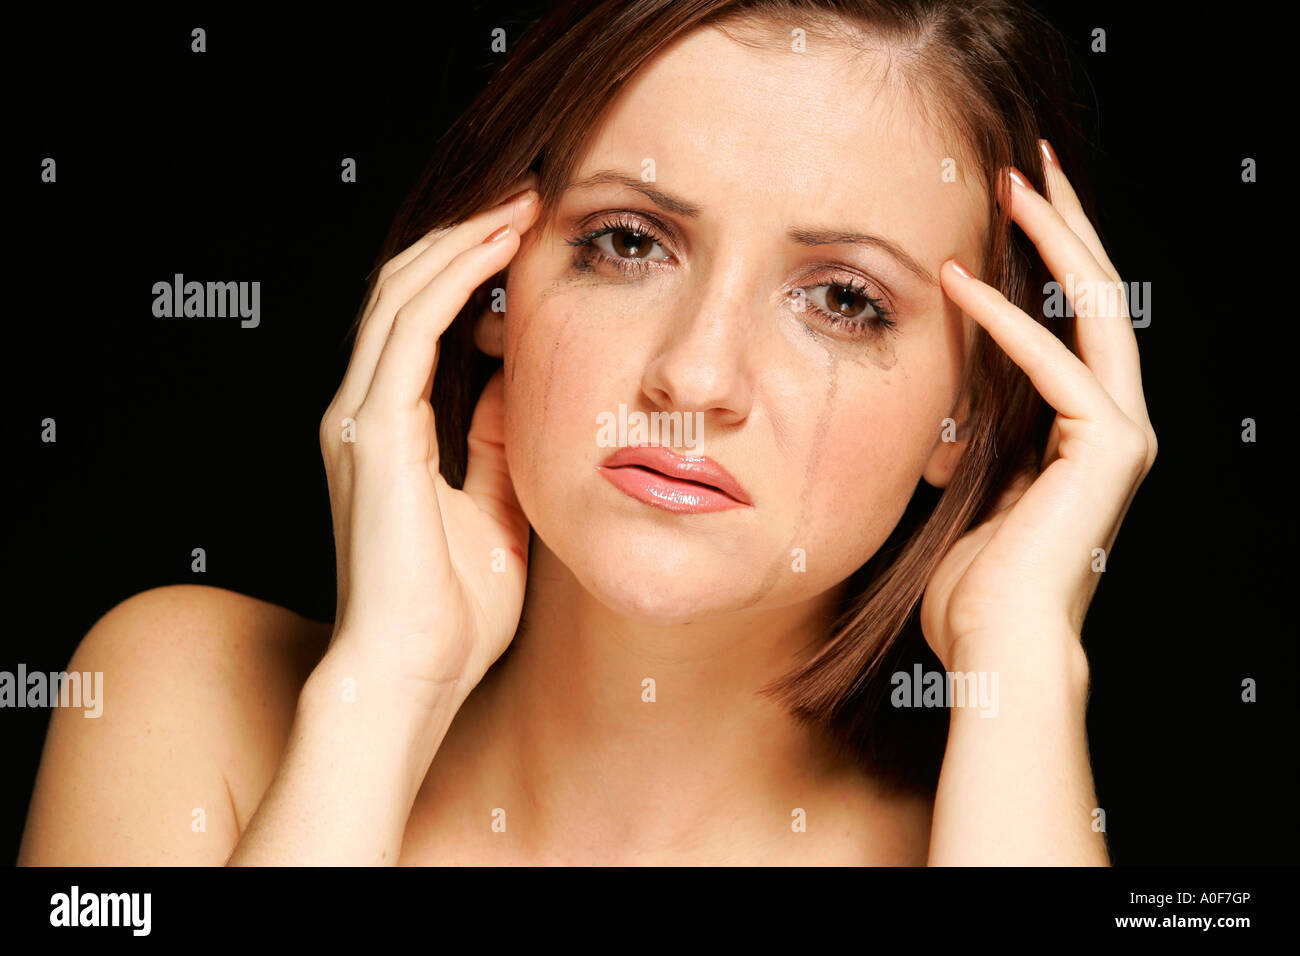 Young woman looking sad Stock Photo